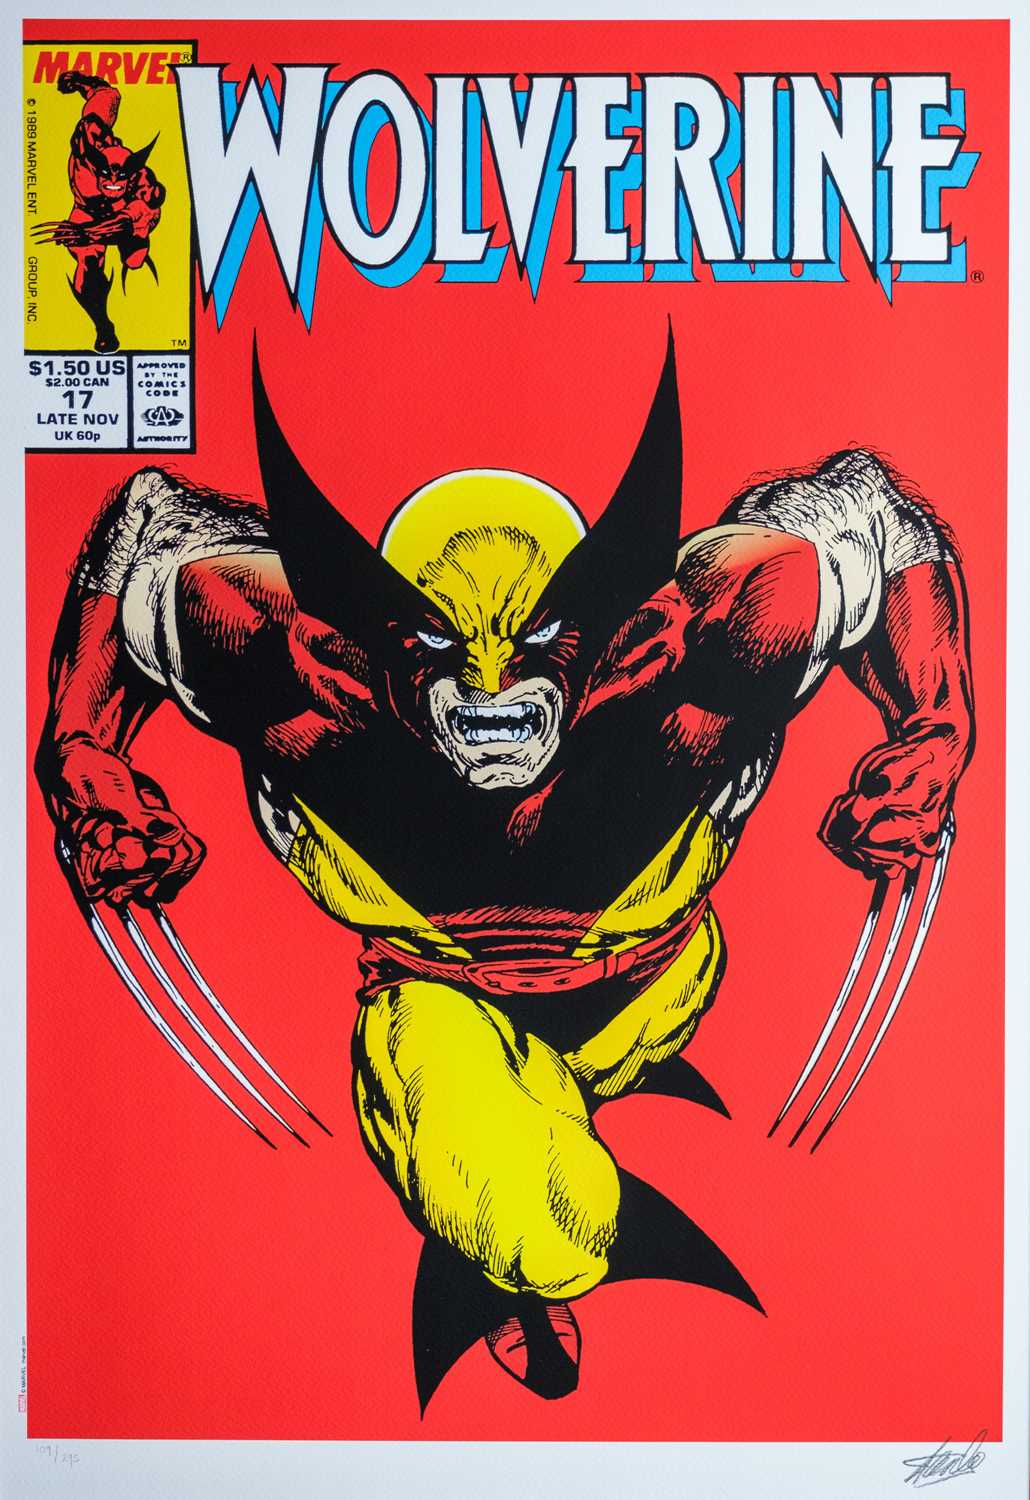 (Signed) Stan LEE (1922-2018) Wolverine #17 (2015)